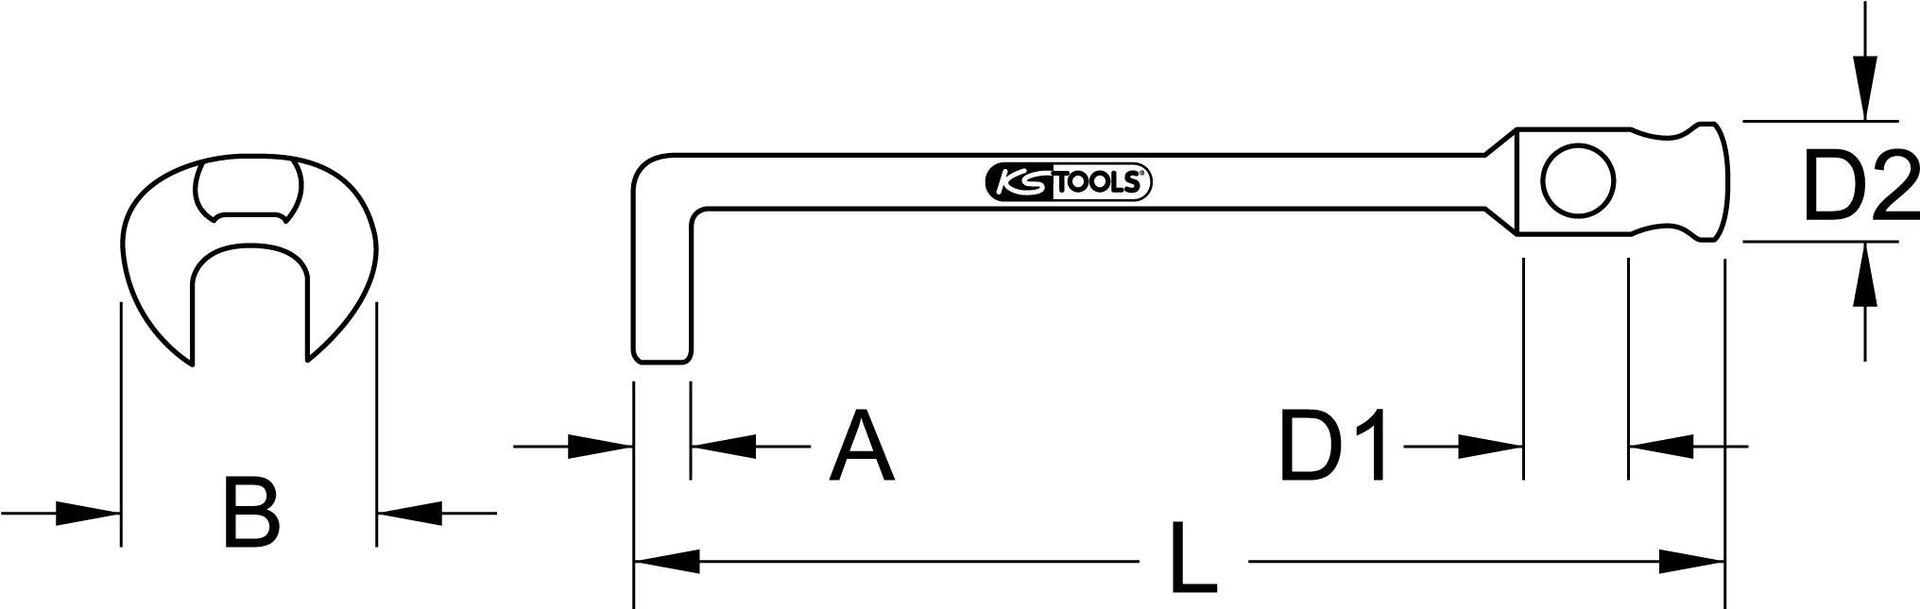 KS TOOLS Klauenschlüssel ohne Drehstift 21 mm (517.9156)